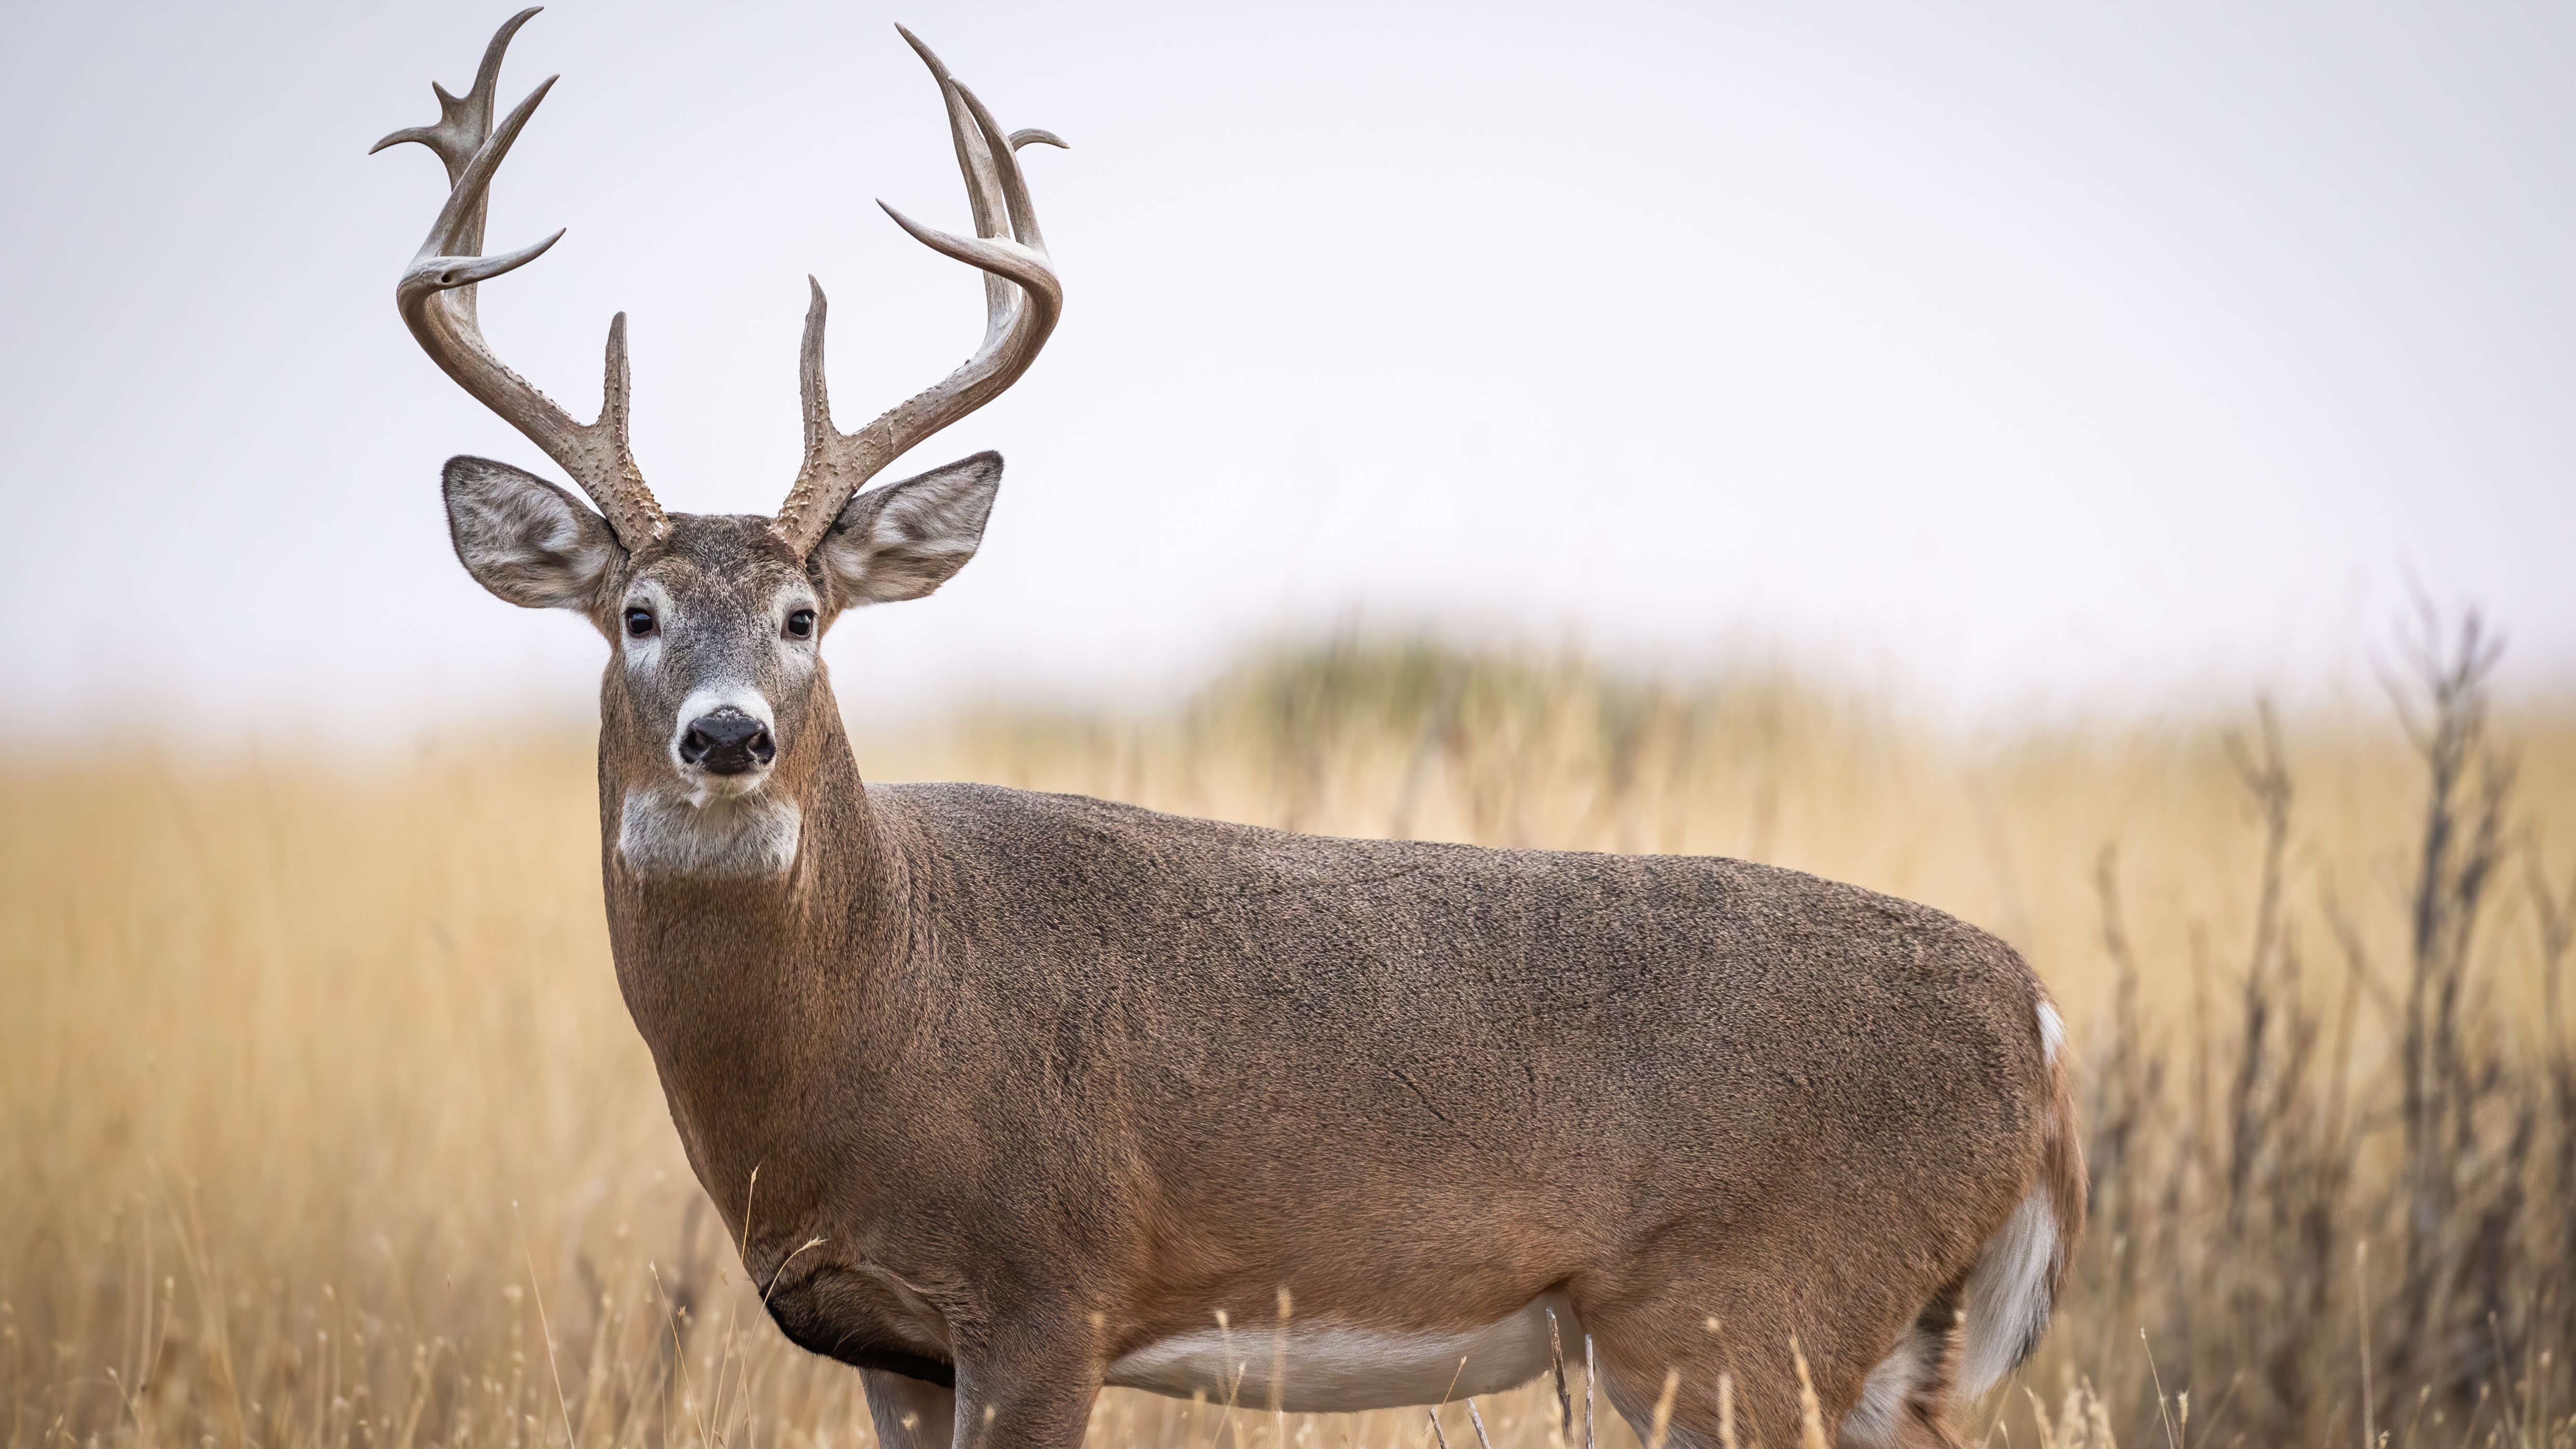 3 Most Important Factors for Deer Antler Growth